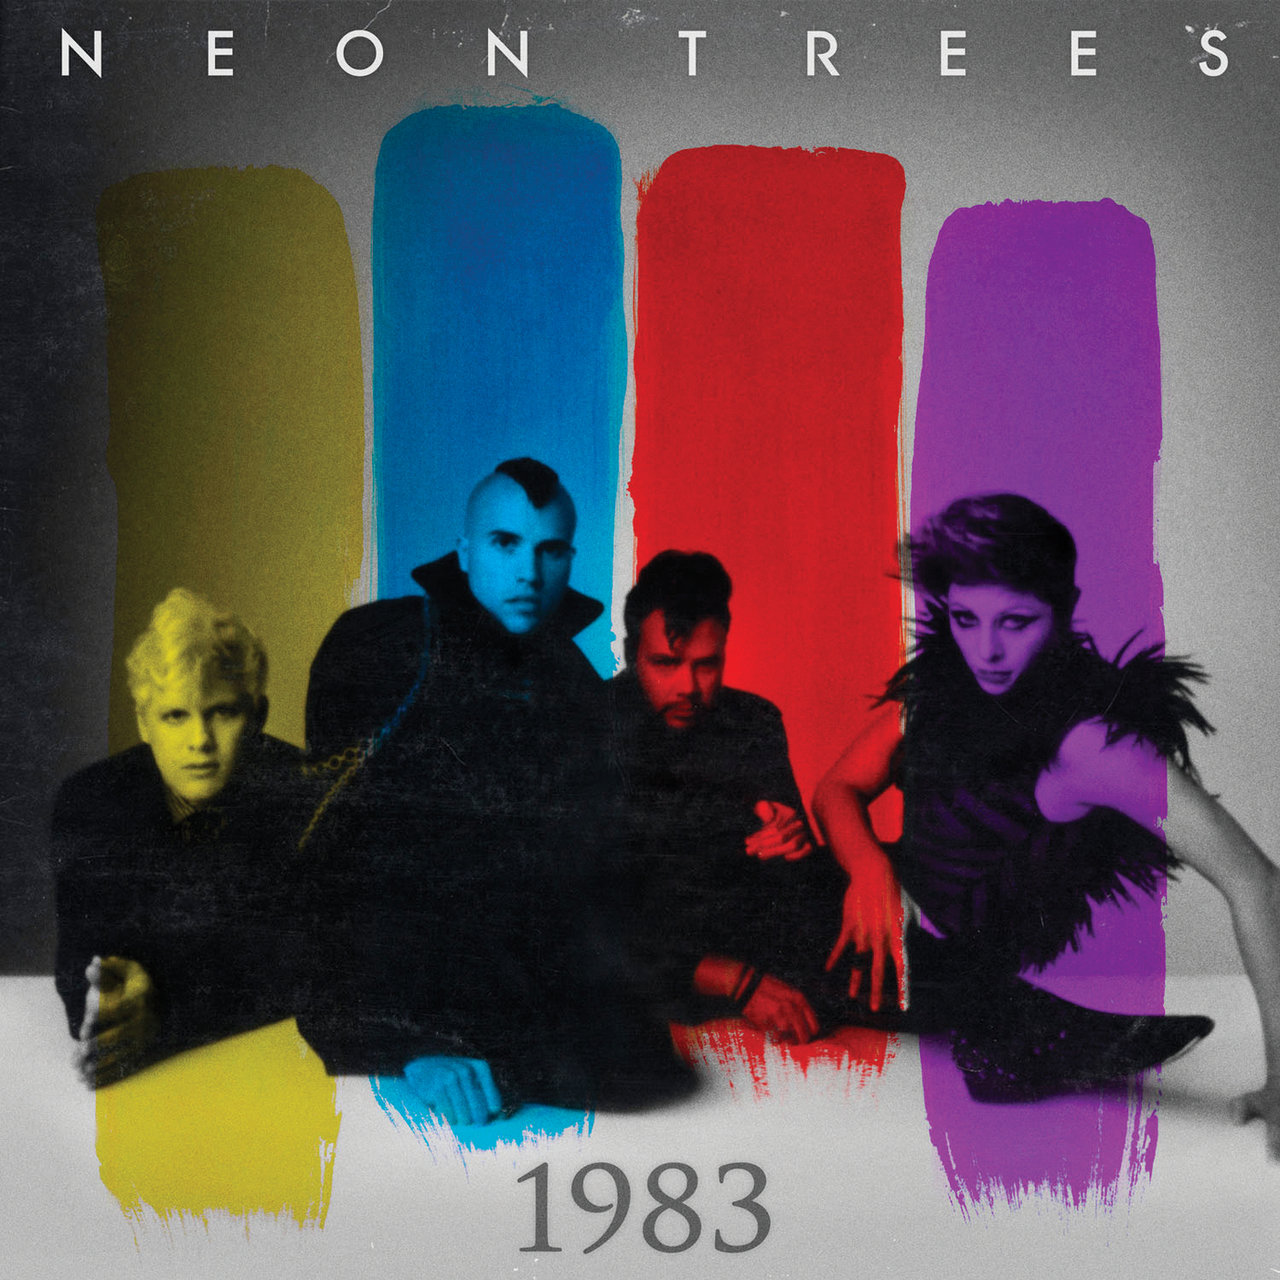 Neon Trees 1983 cover artwork